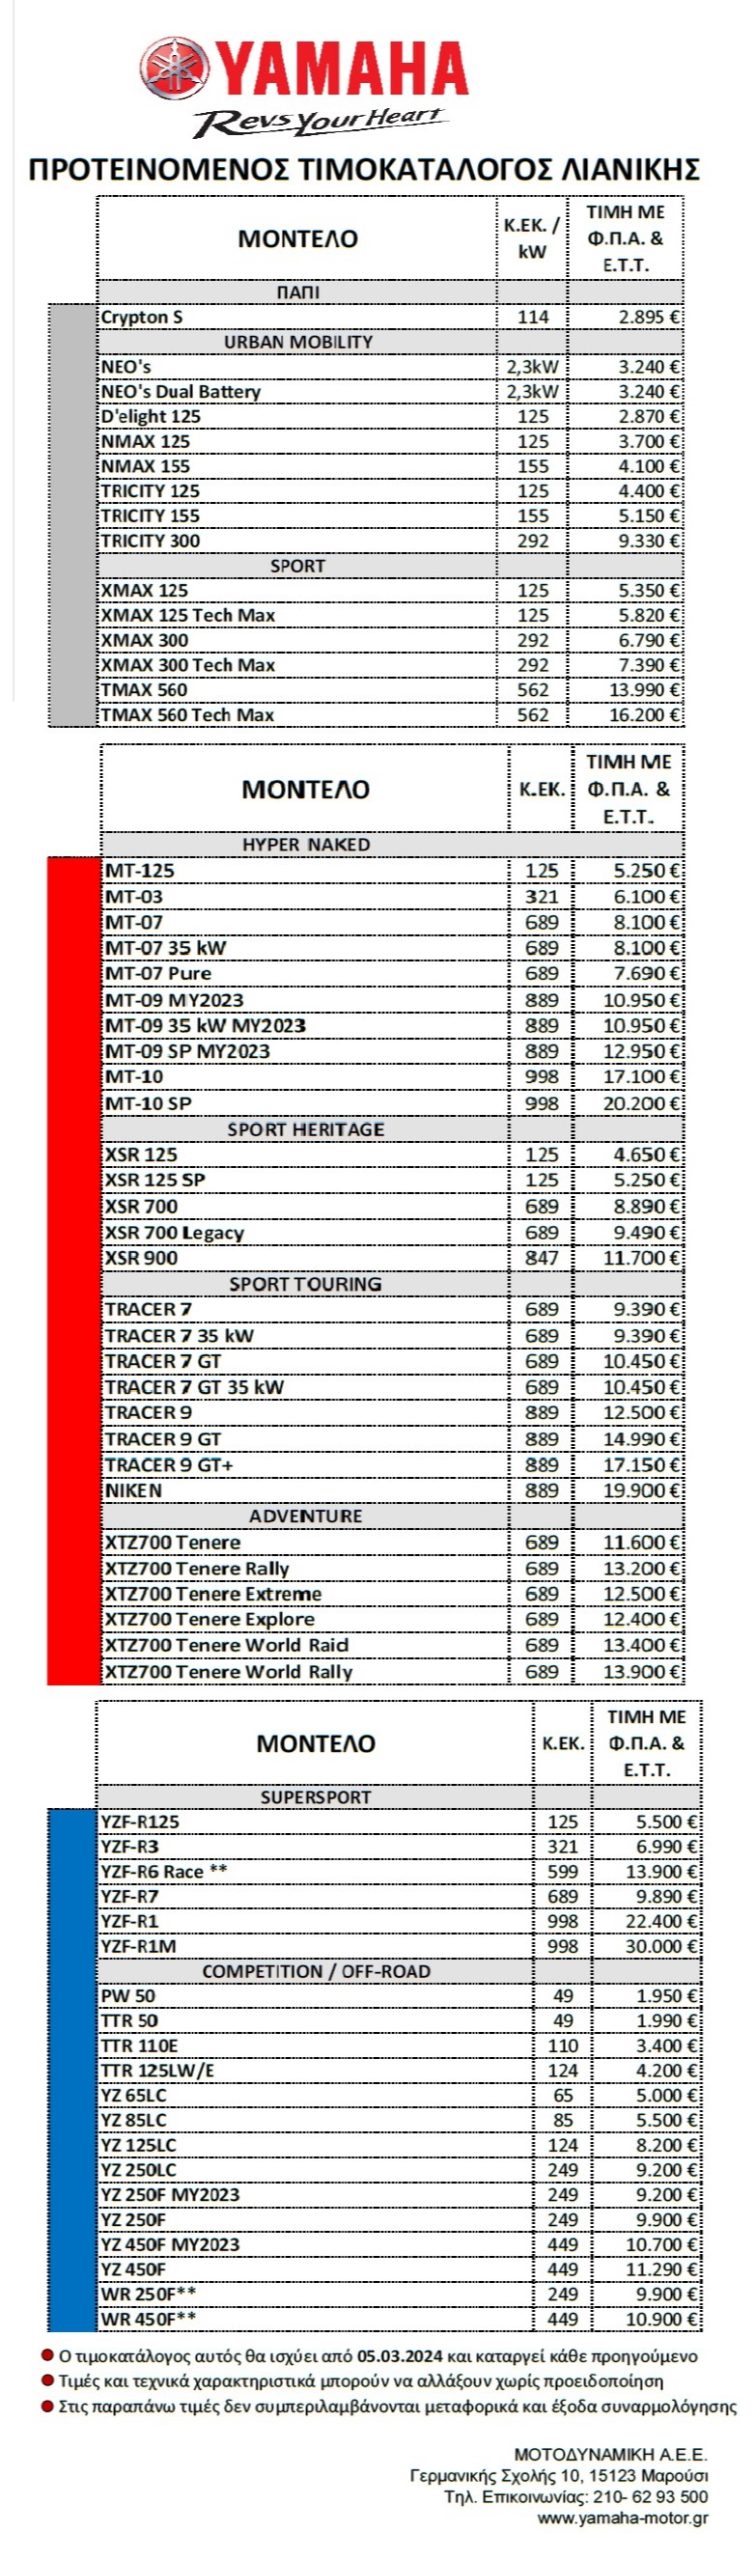 Yamaha price list 2024 march scaled.jpg